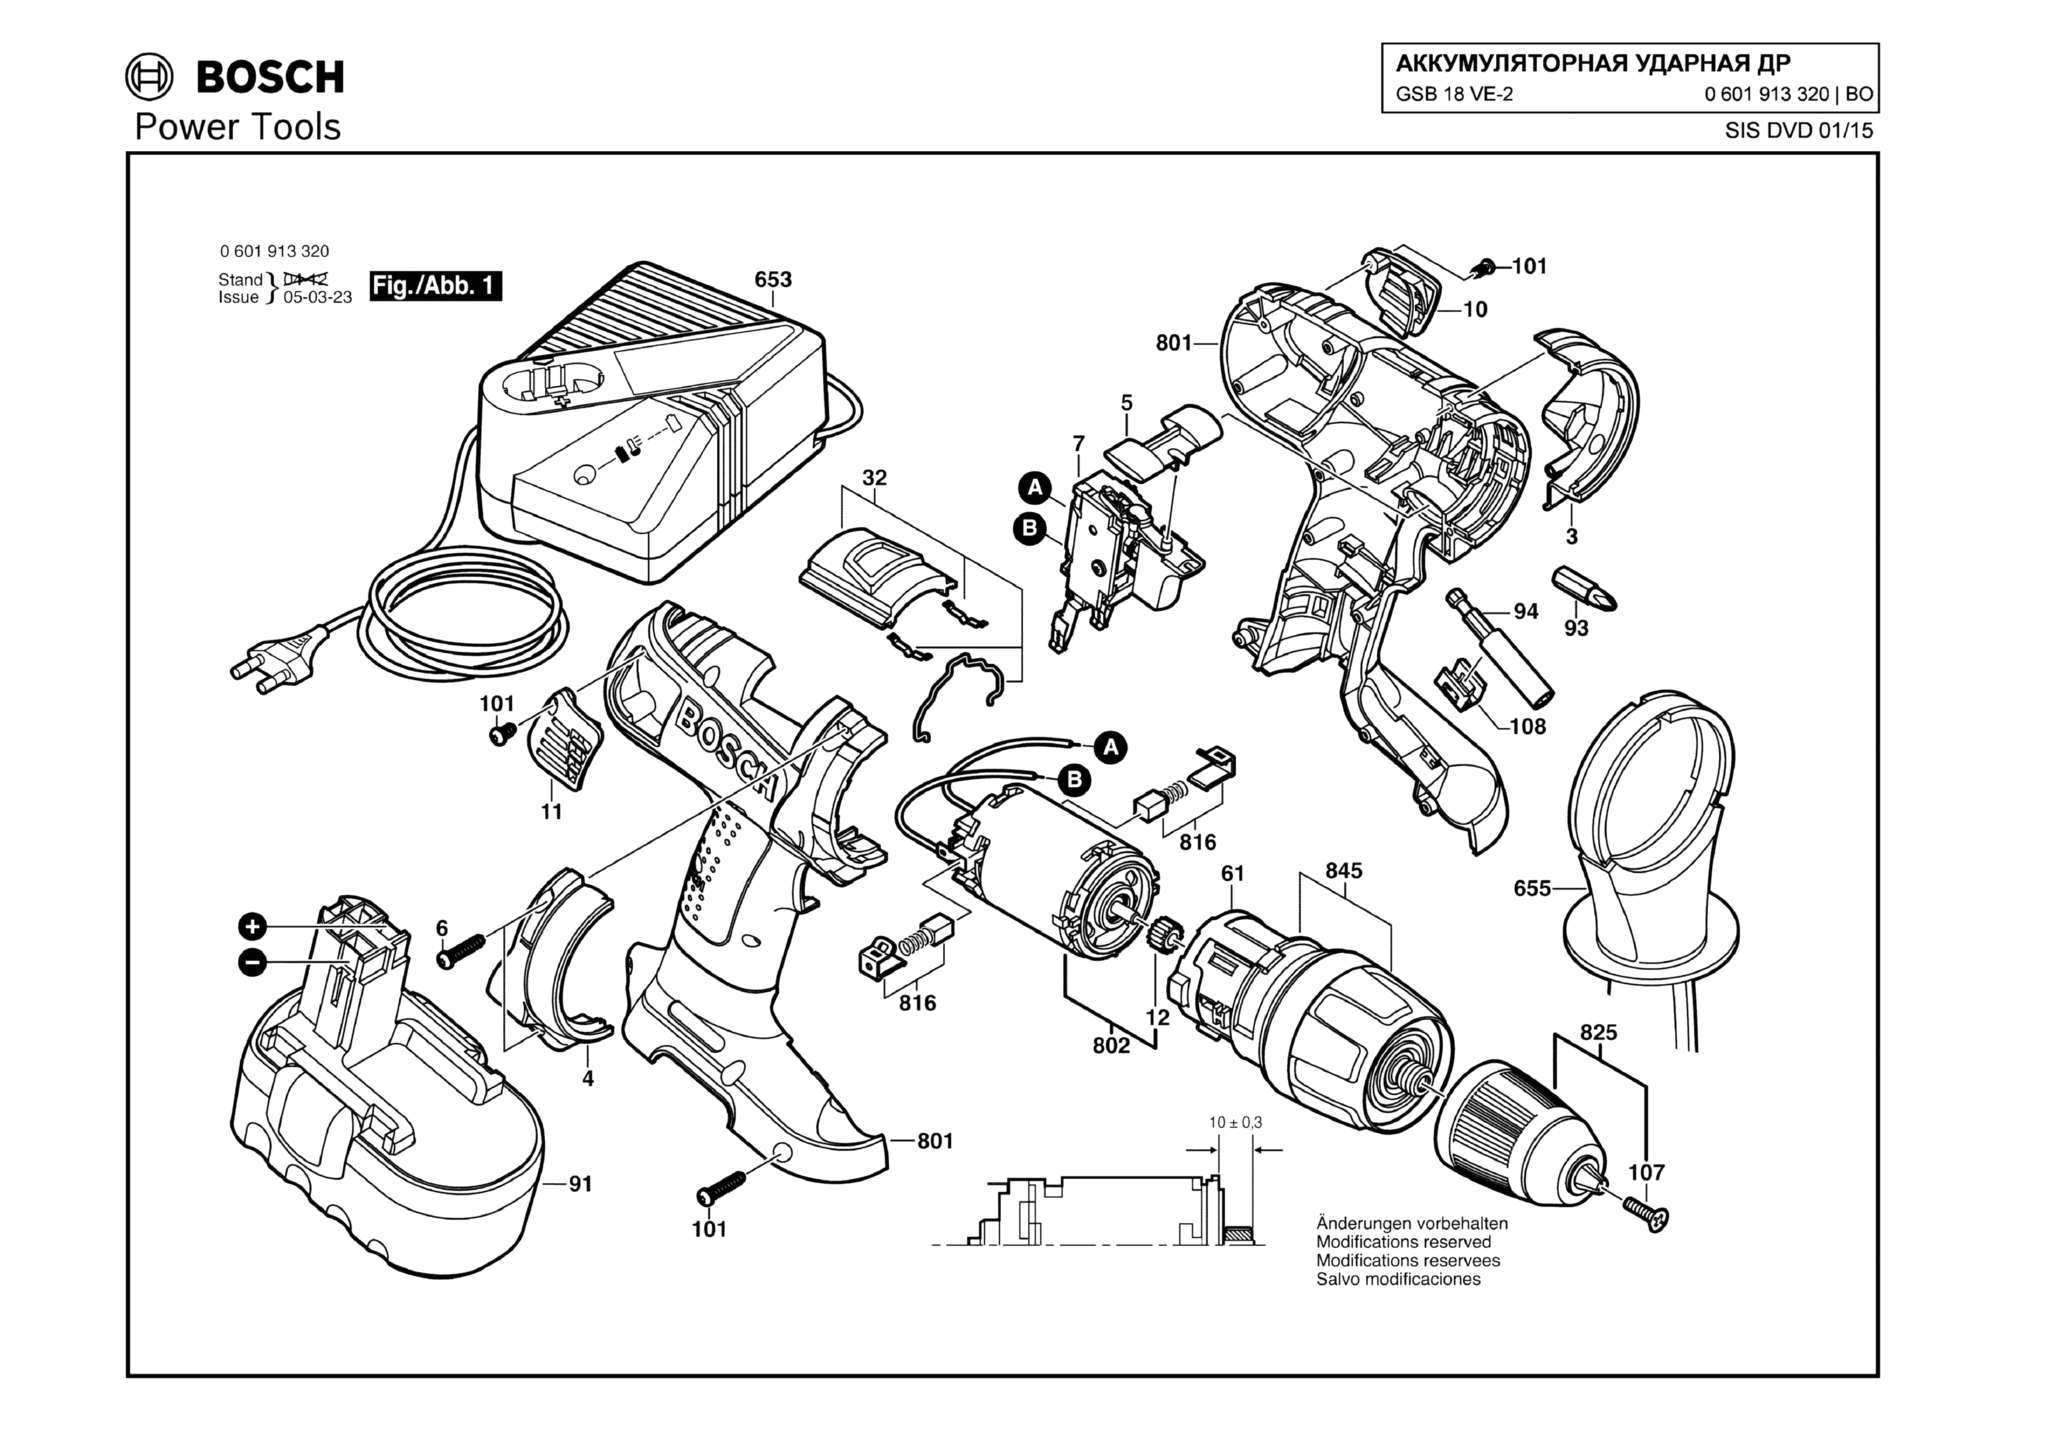 Запчасти, схема и деталировка Bosch GSB 18 VE-2 (ТИП 0601913320)